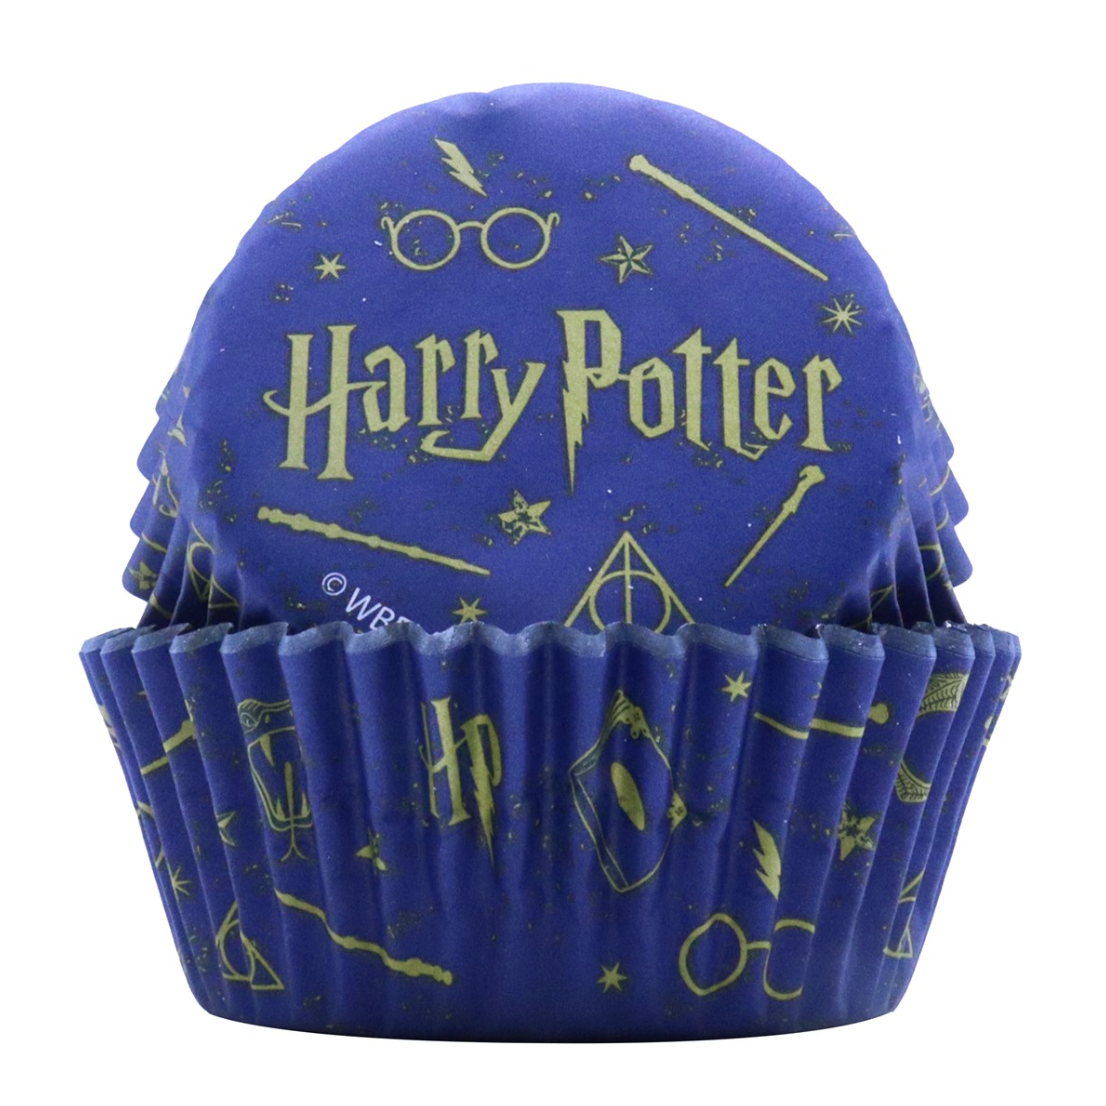 Harry Potter Cupcake Backförmchen - 30 Stück